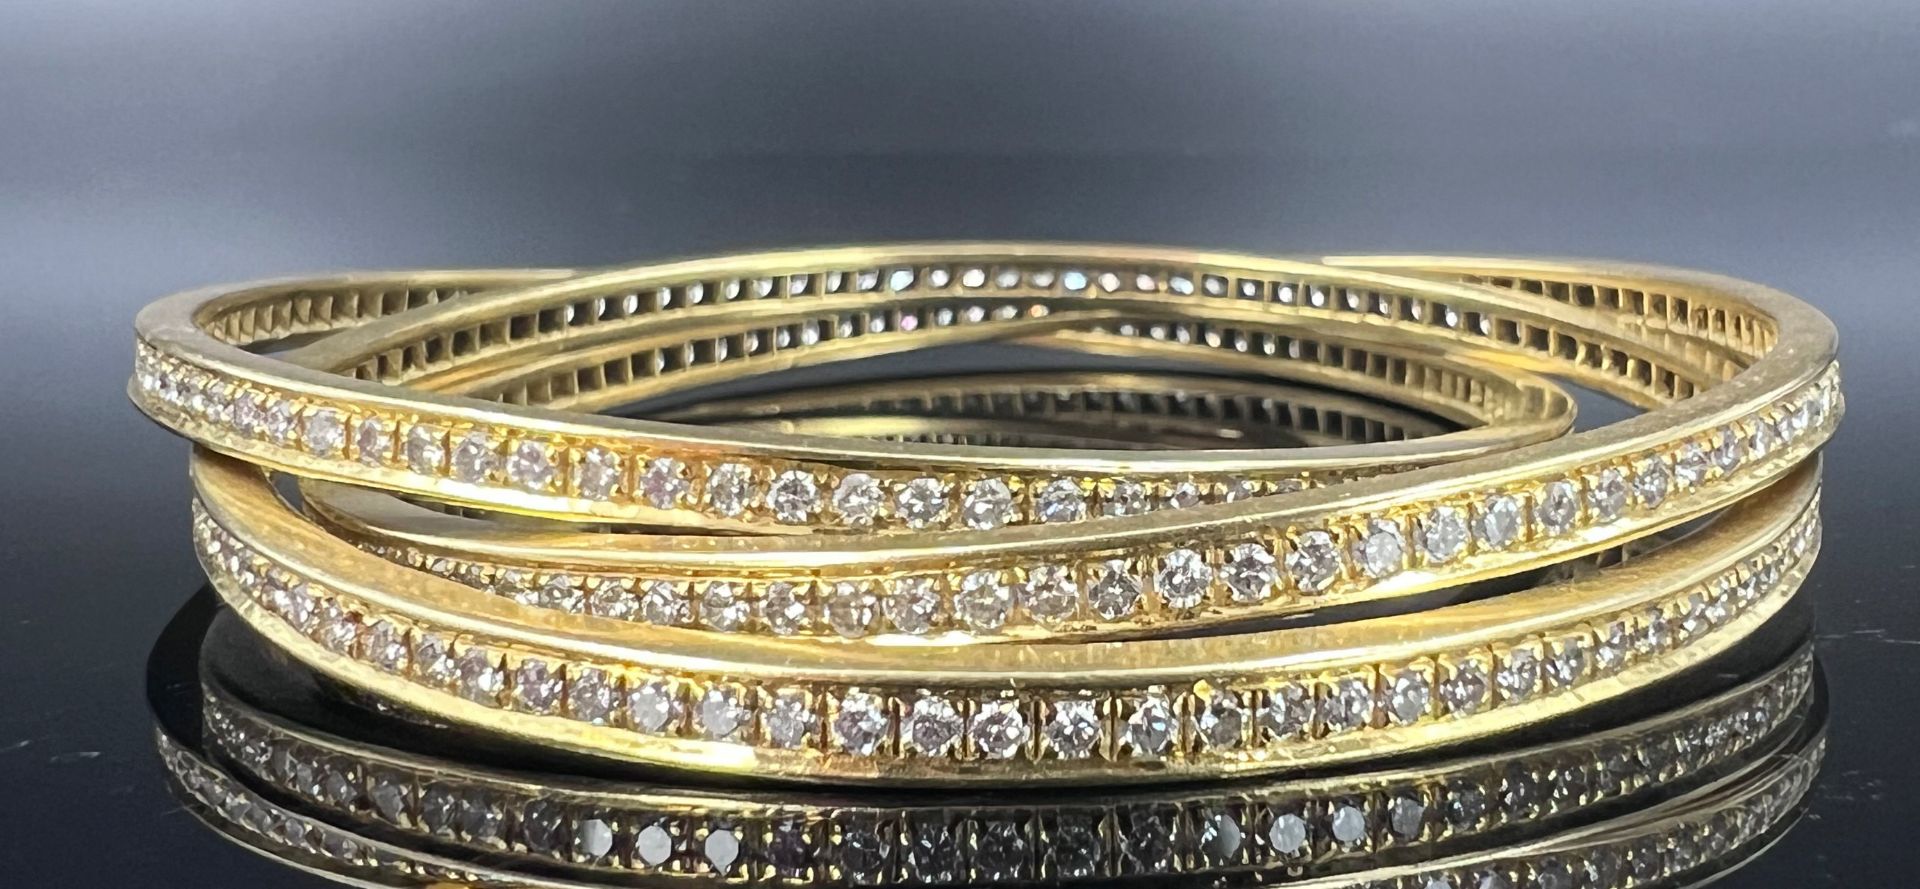 3-piece bangle. 750 yellow gold with diamonds.